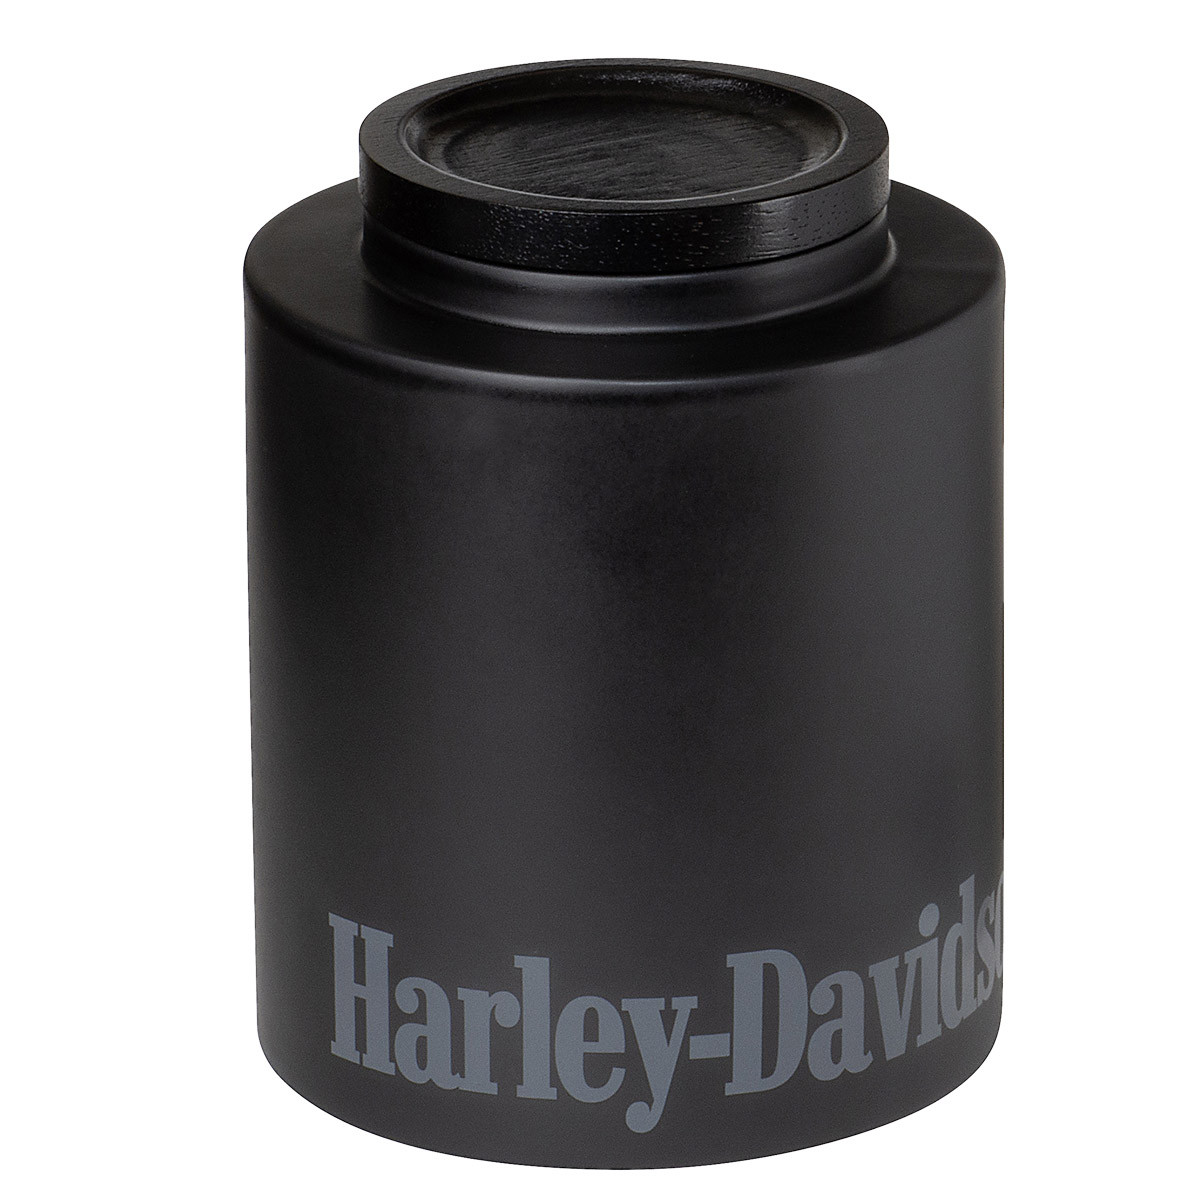 HARLEY DAVIDSON COOKIE JAR - SMALL-